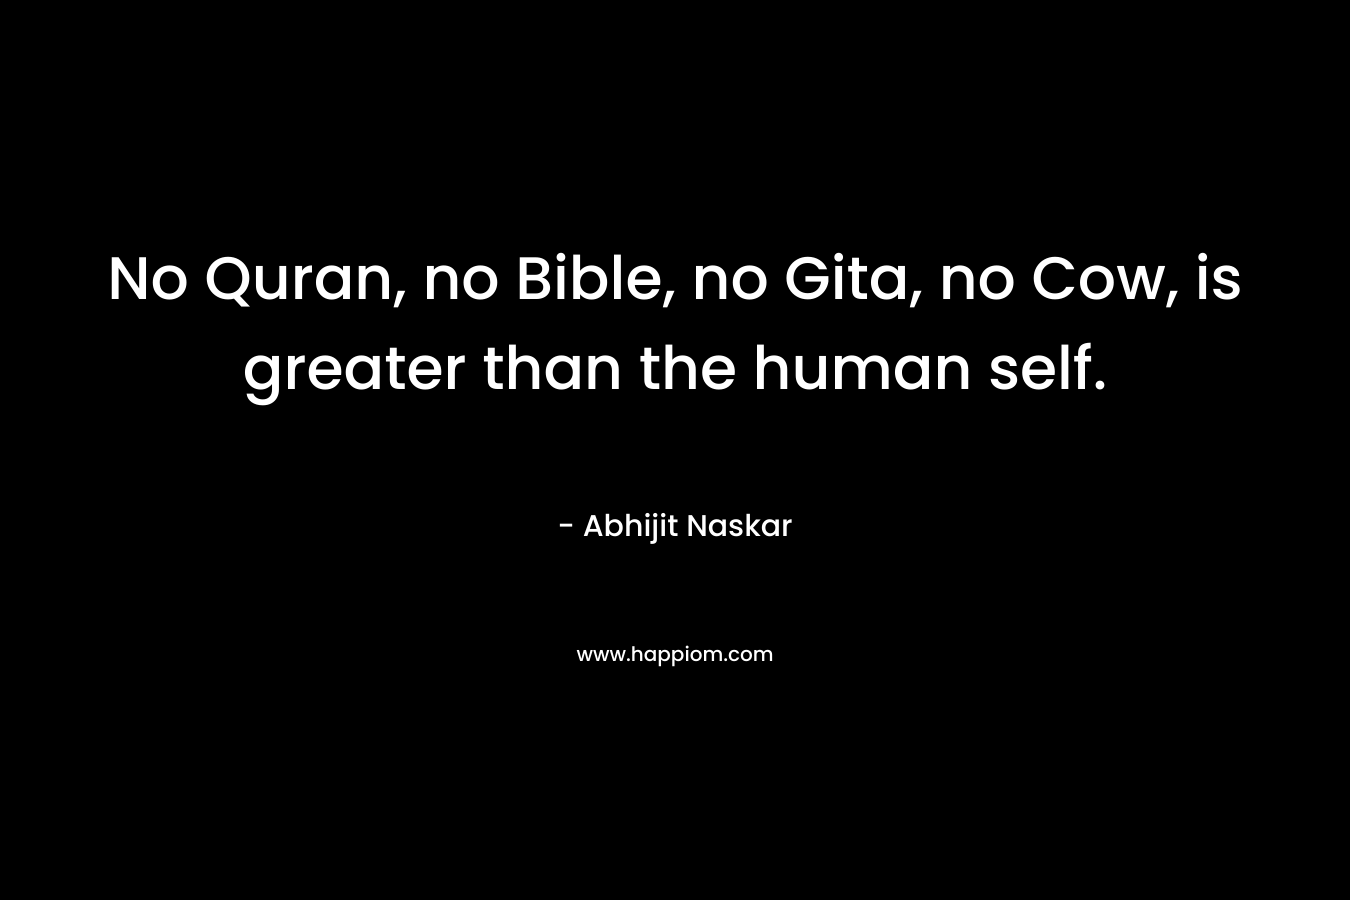 No Quran, no Bible, no Gita, no Cow, is greater than the human self.